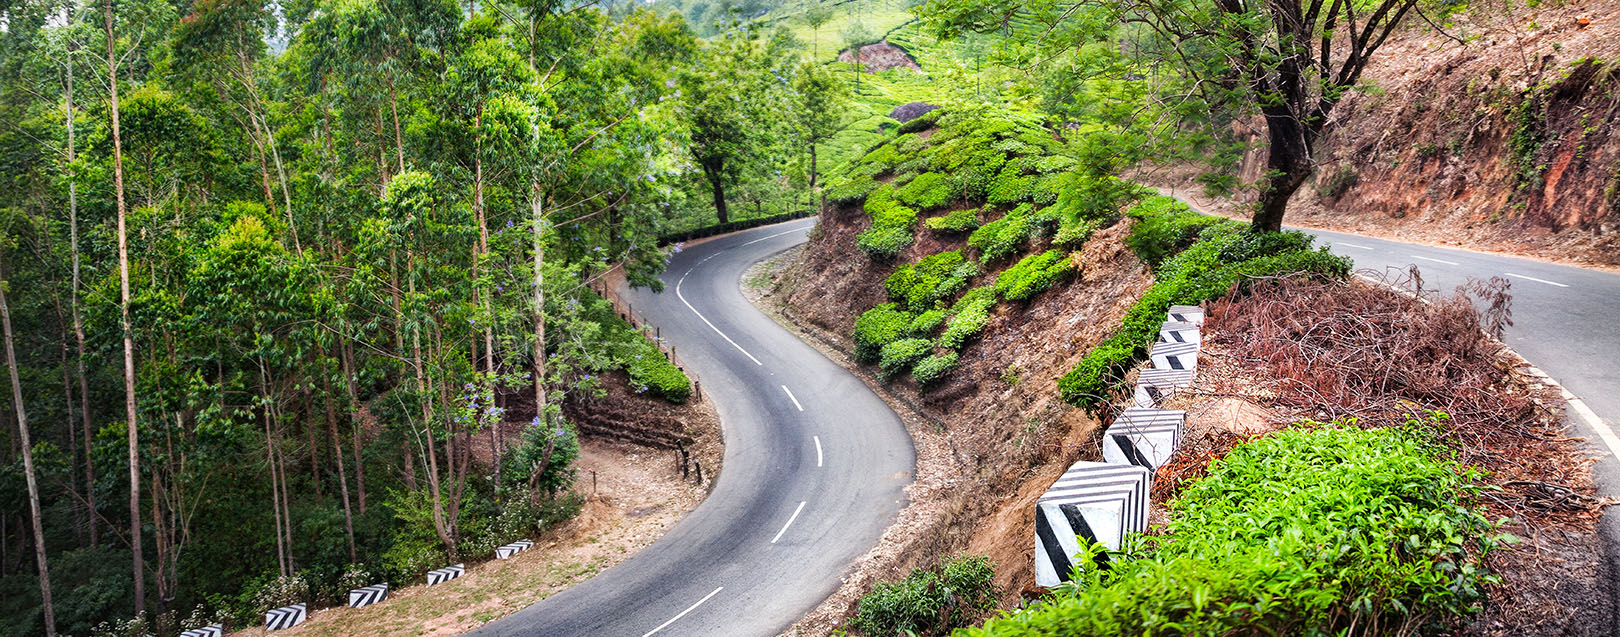 Kerala Tourism conducts roadshows in Australia